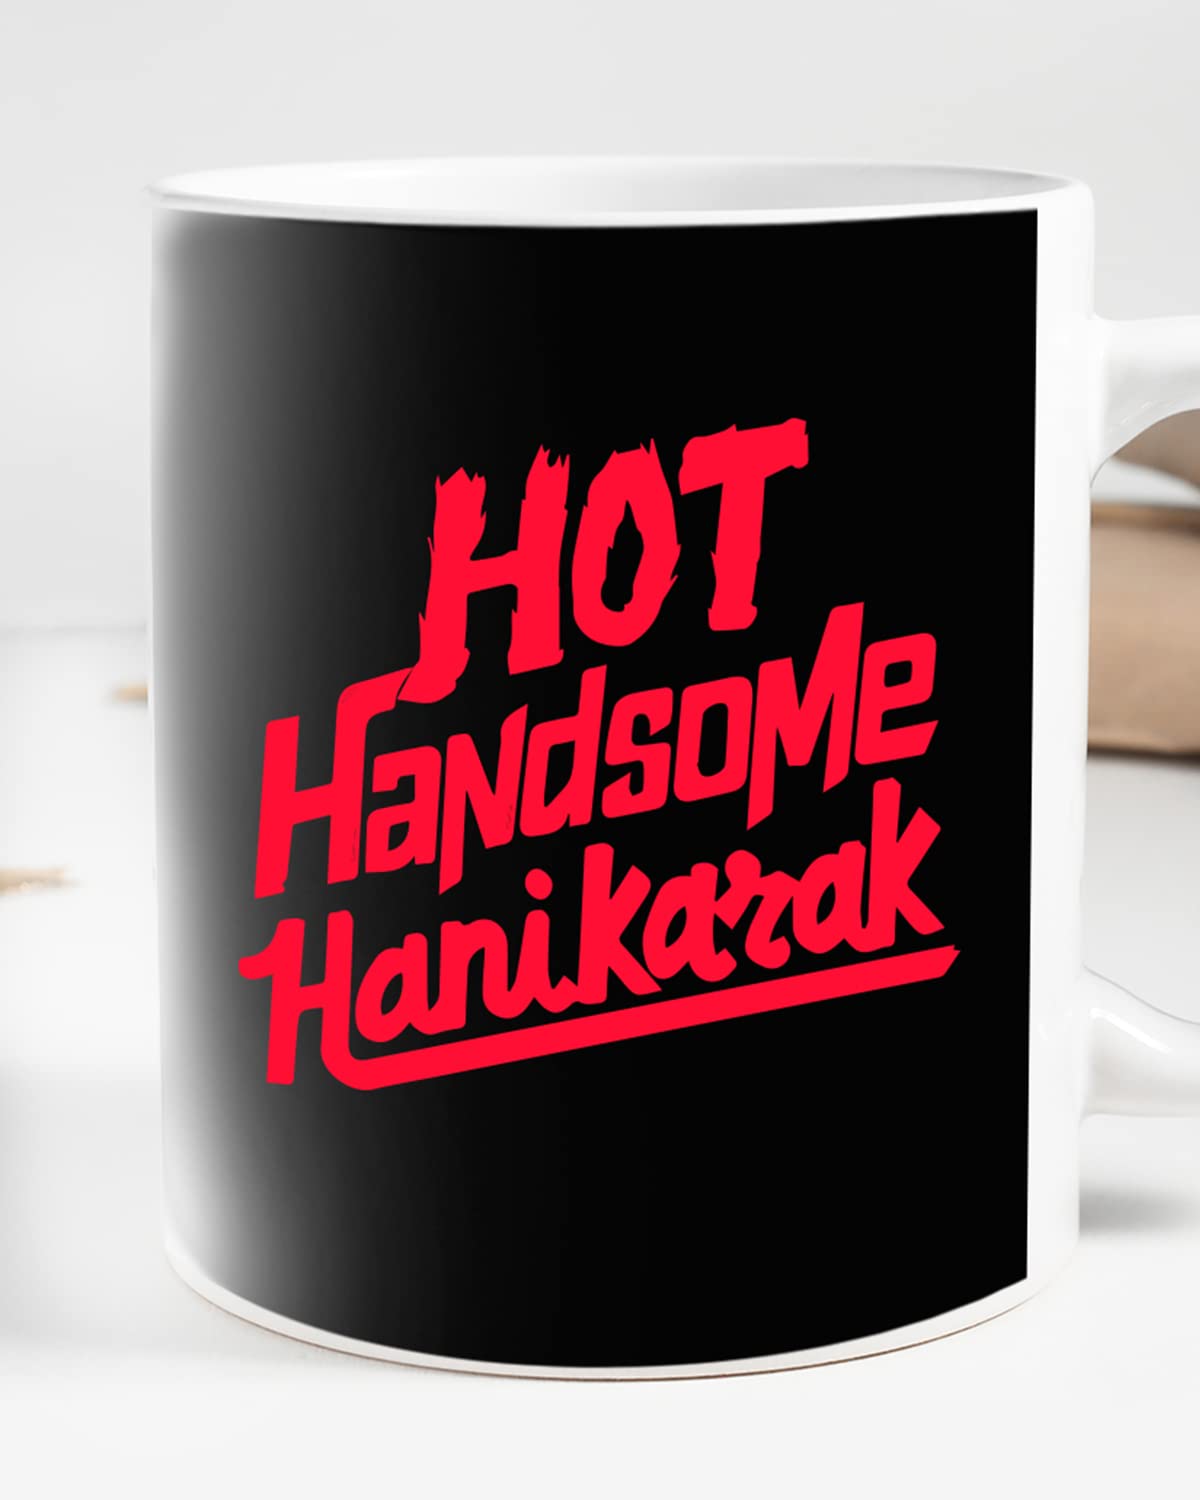 HOT Handsome HANIKARAK Coffee Mug - Gift for Friend, Birthday Gift, Birthday Mug, Sarcasm Quotes Mug, Mugs with Funny & Funky Dialogues, Bollywood Mugs, Funny Mugs for Him & Her